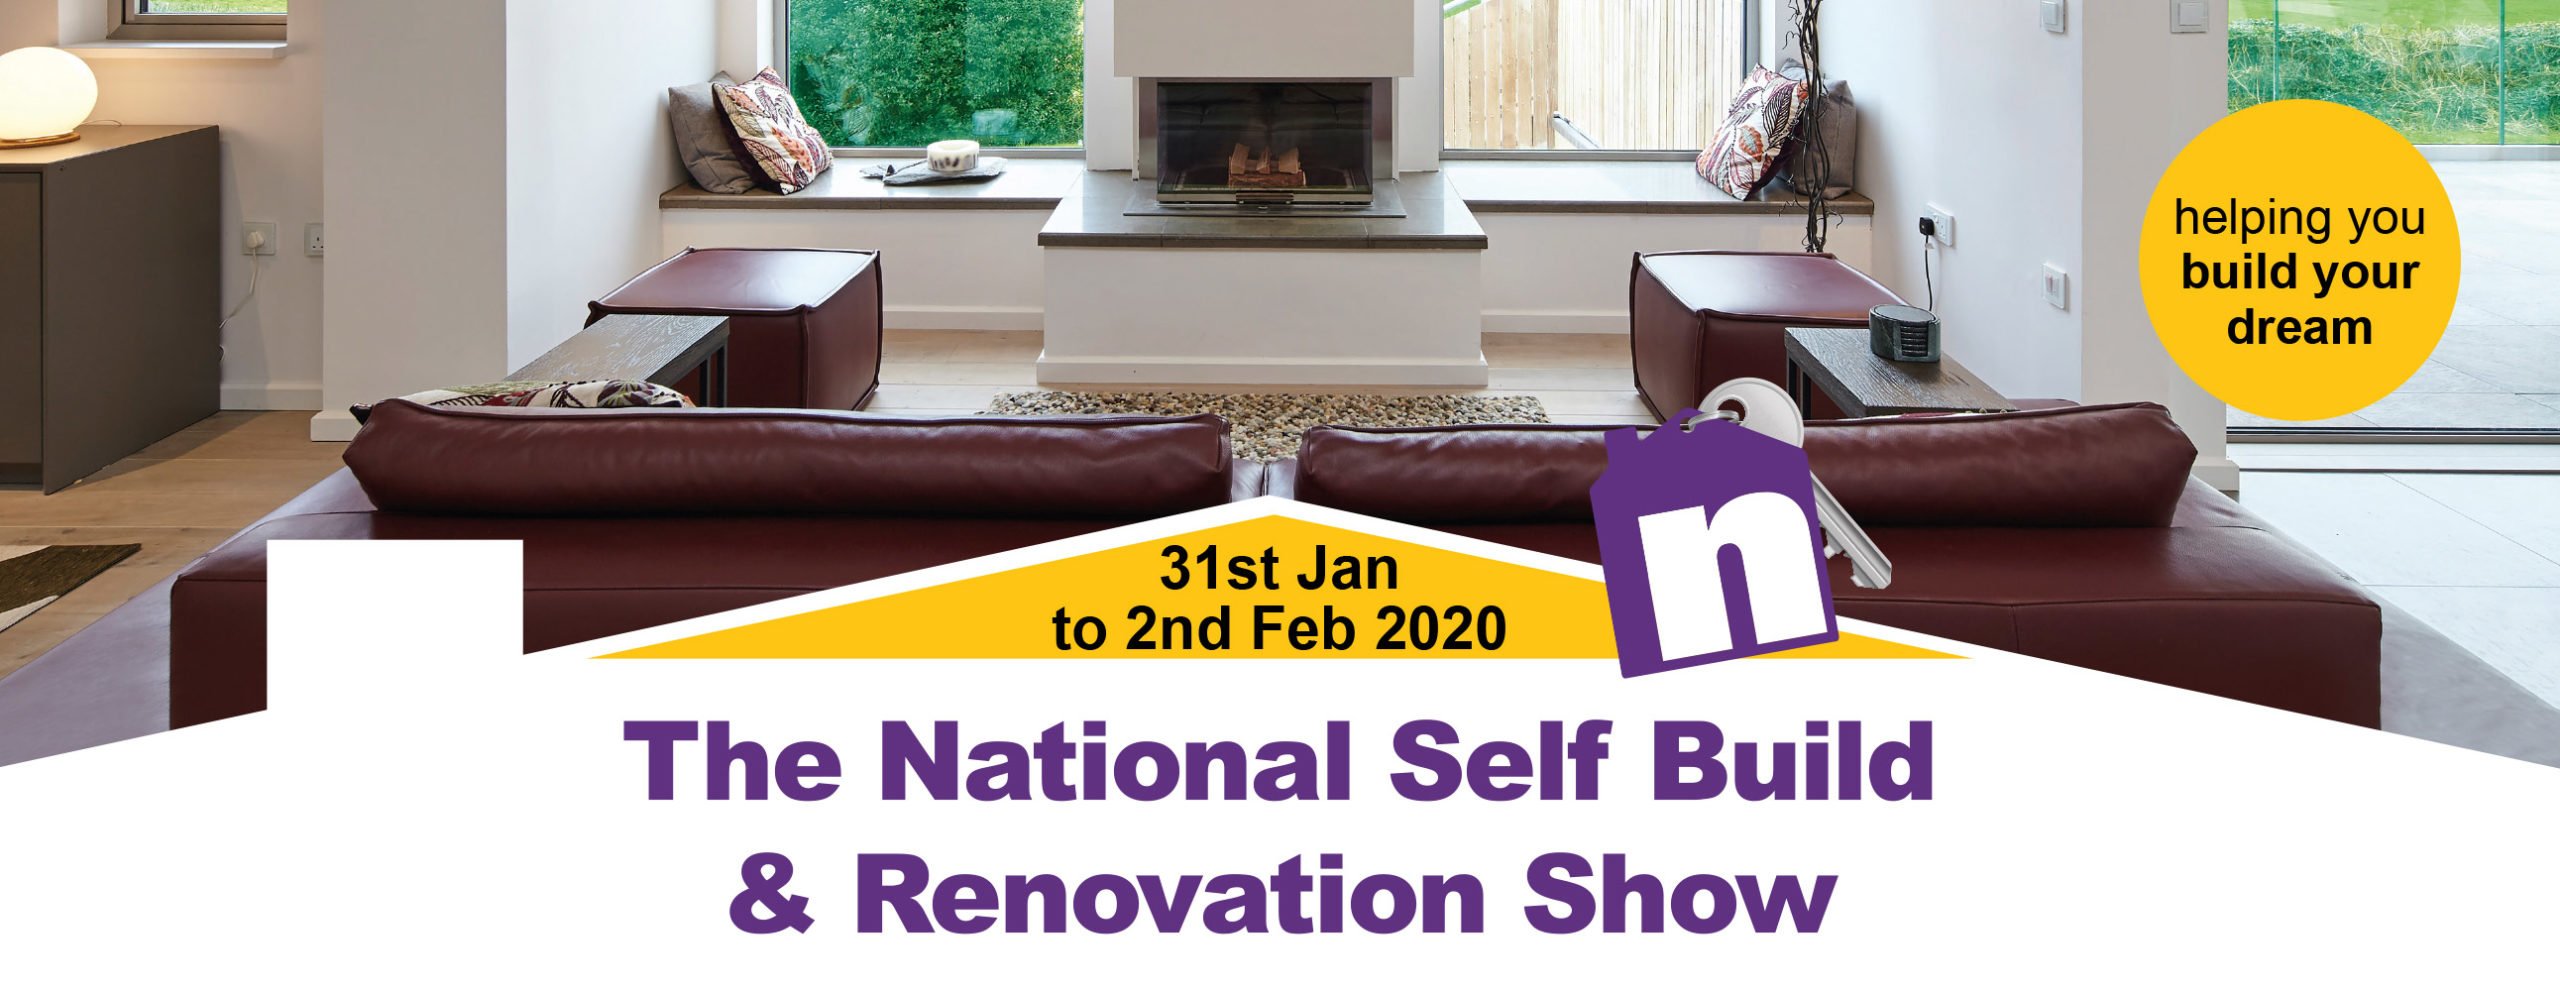 nsbrc show national self build & renovation show 2020